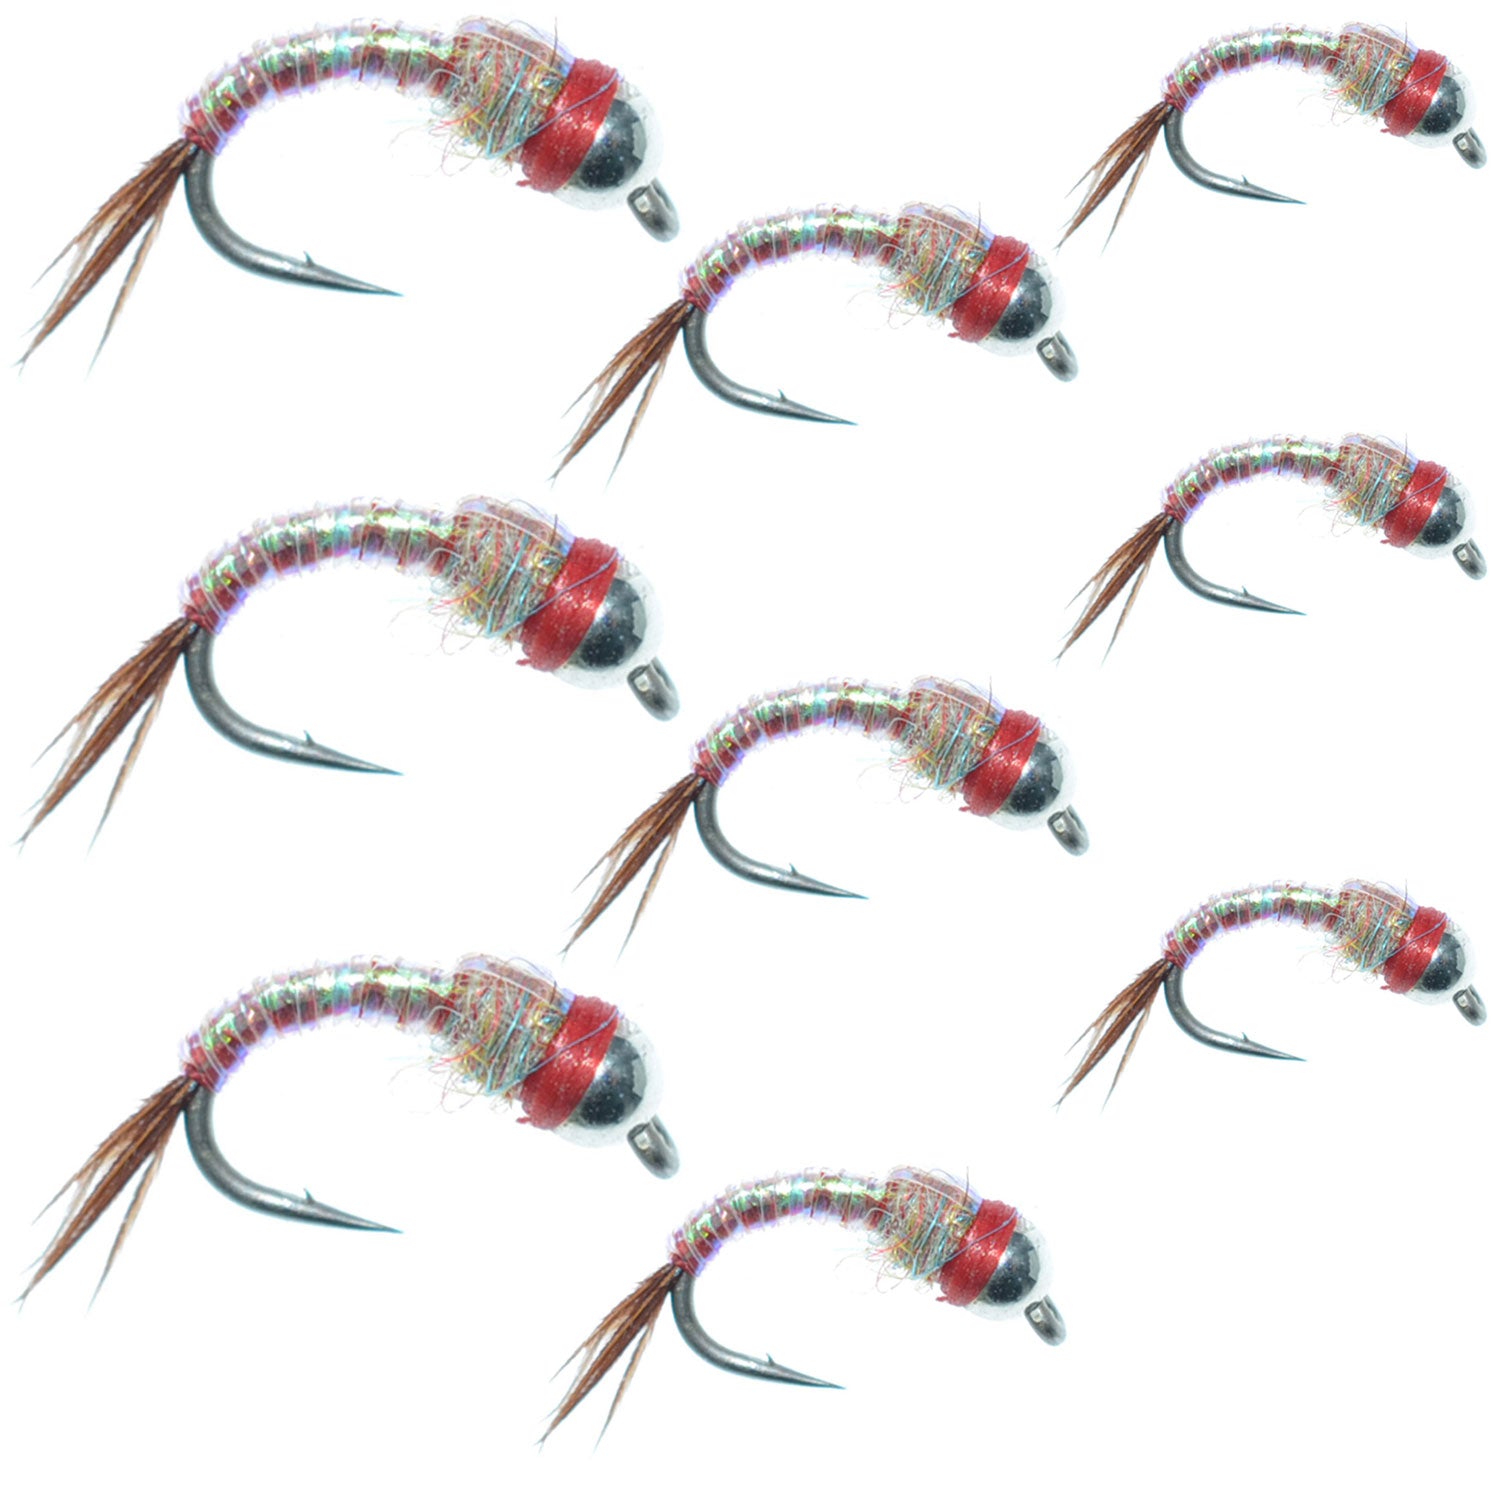 Bead Head Rainbow Warrior Midge Assortment - Silver Bead Head - 3 Each